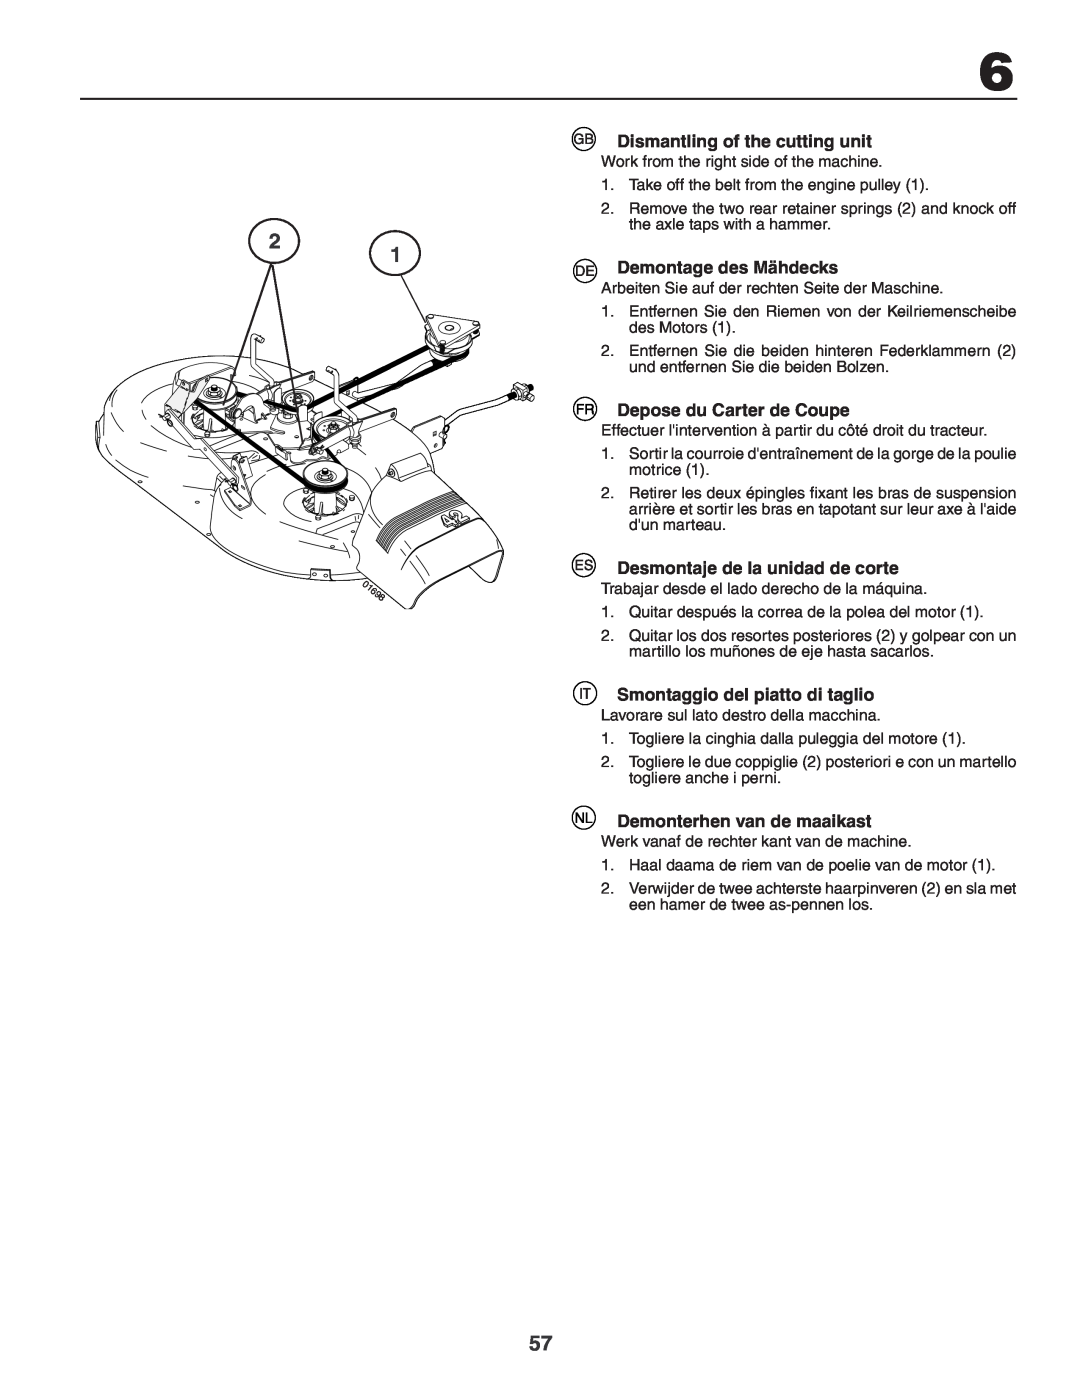 Husqvarna YTH180XP instruction manual Dismantling of the cutting unit, Demontage des Mähdecks, Depose du Carter de Coupe 